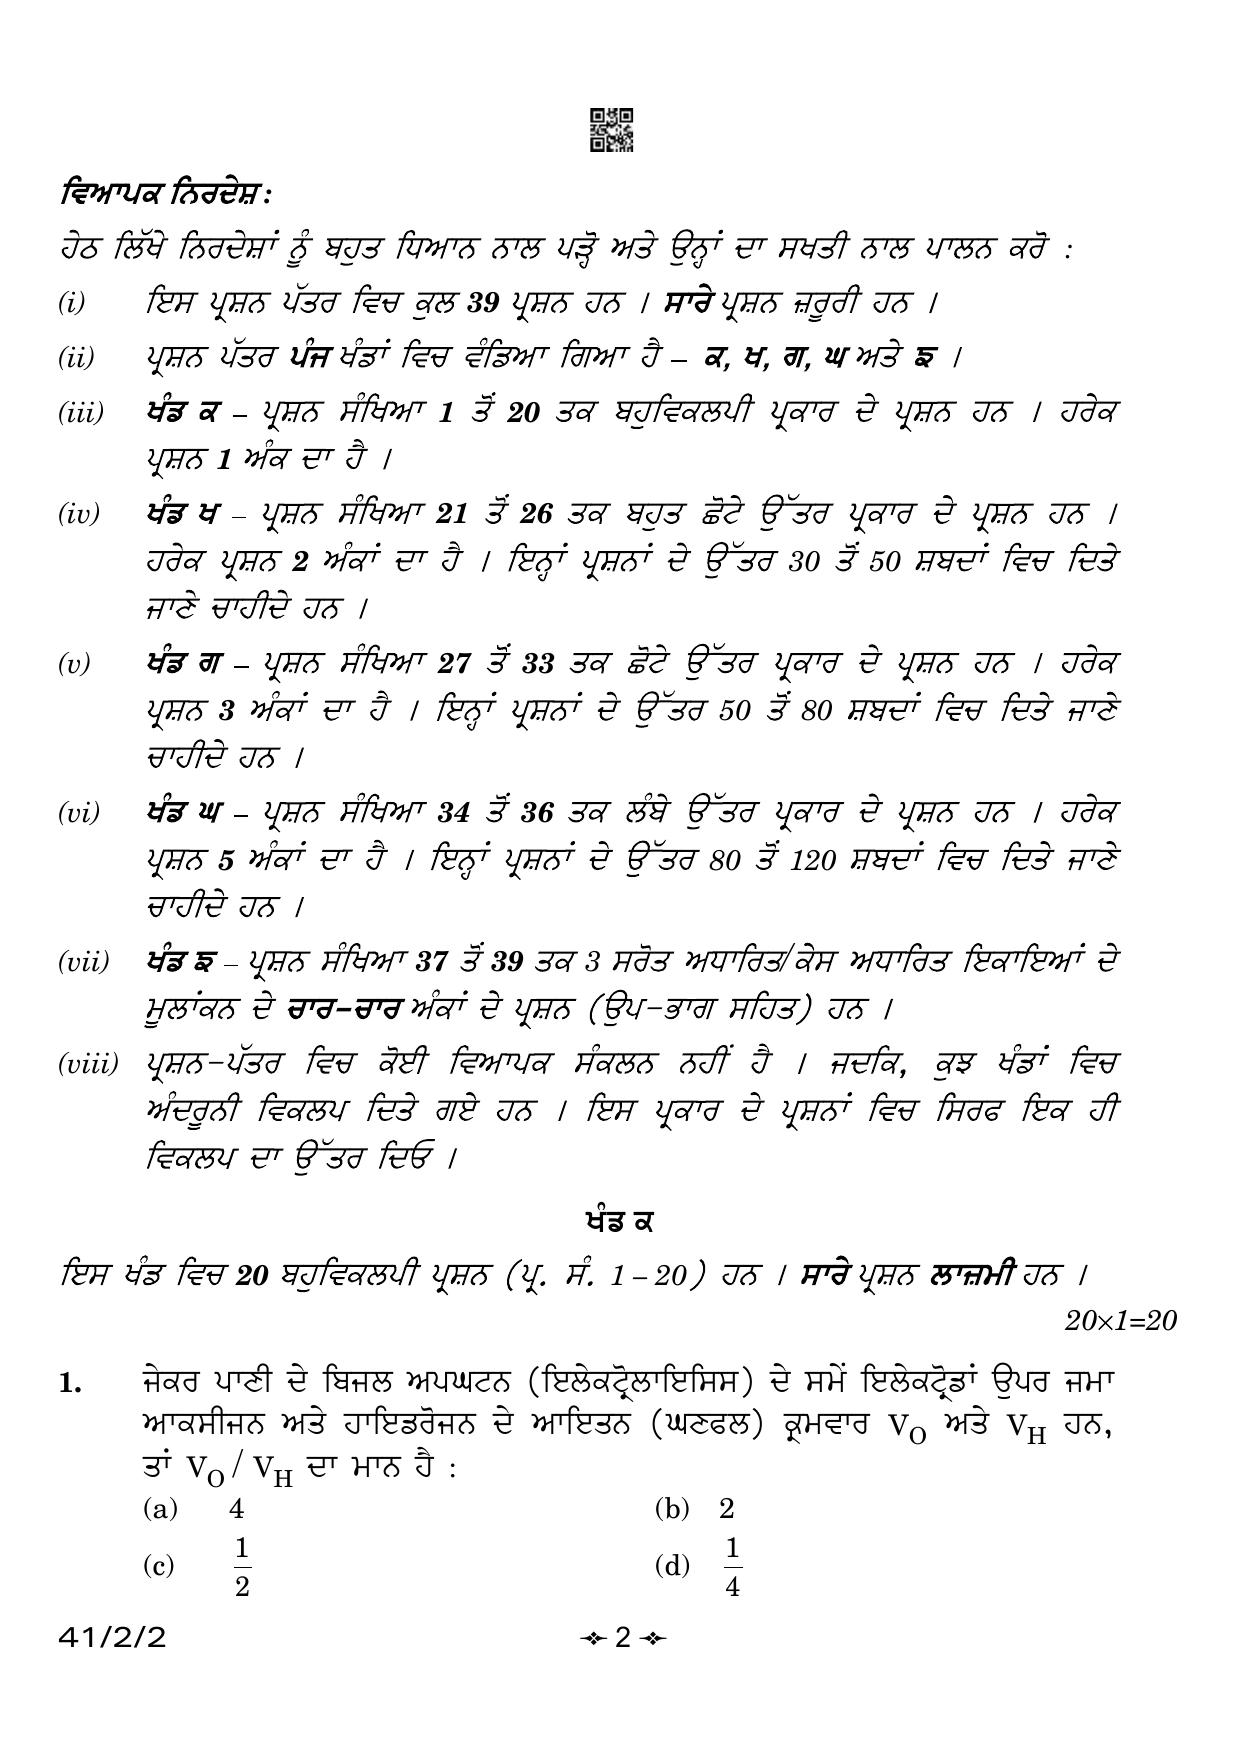 CBSE Class 10 41-2-2 Science Punjabi Version 2023 Question Paper - Page 2